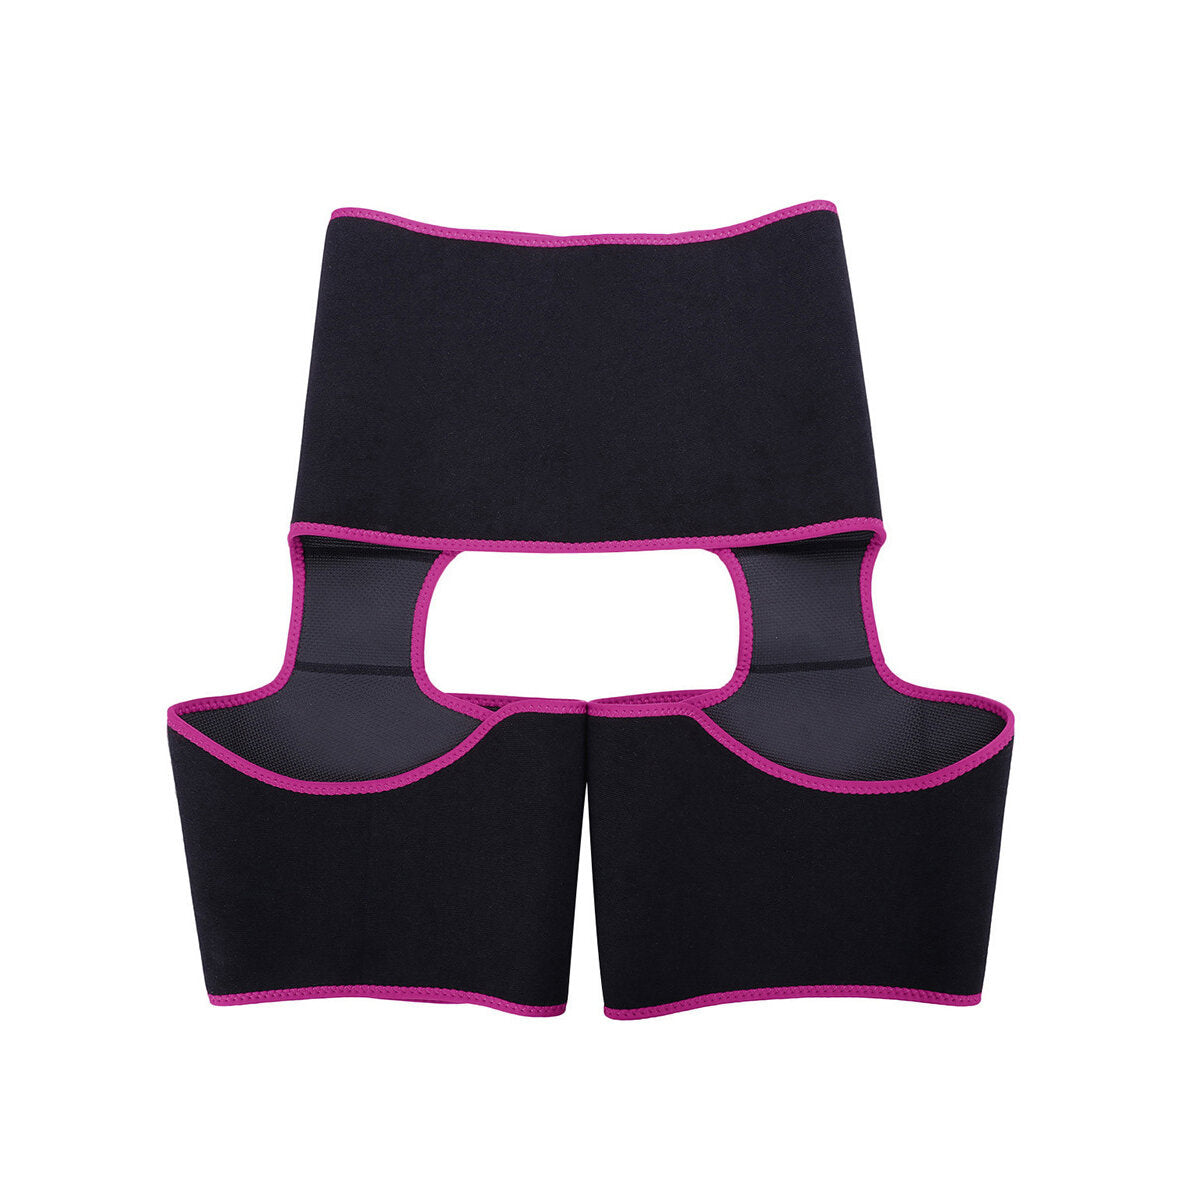 Neoprene Thigh Shaper High Waist Body Shaper Slimmer Wrap Thermo Trainer Sport Waist Protective Accessories